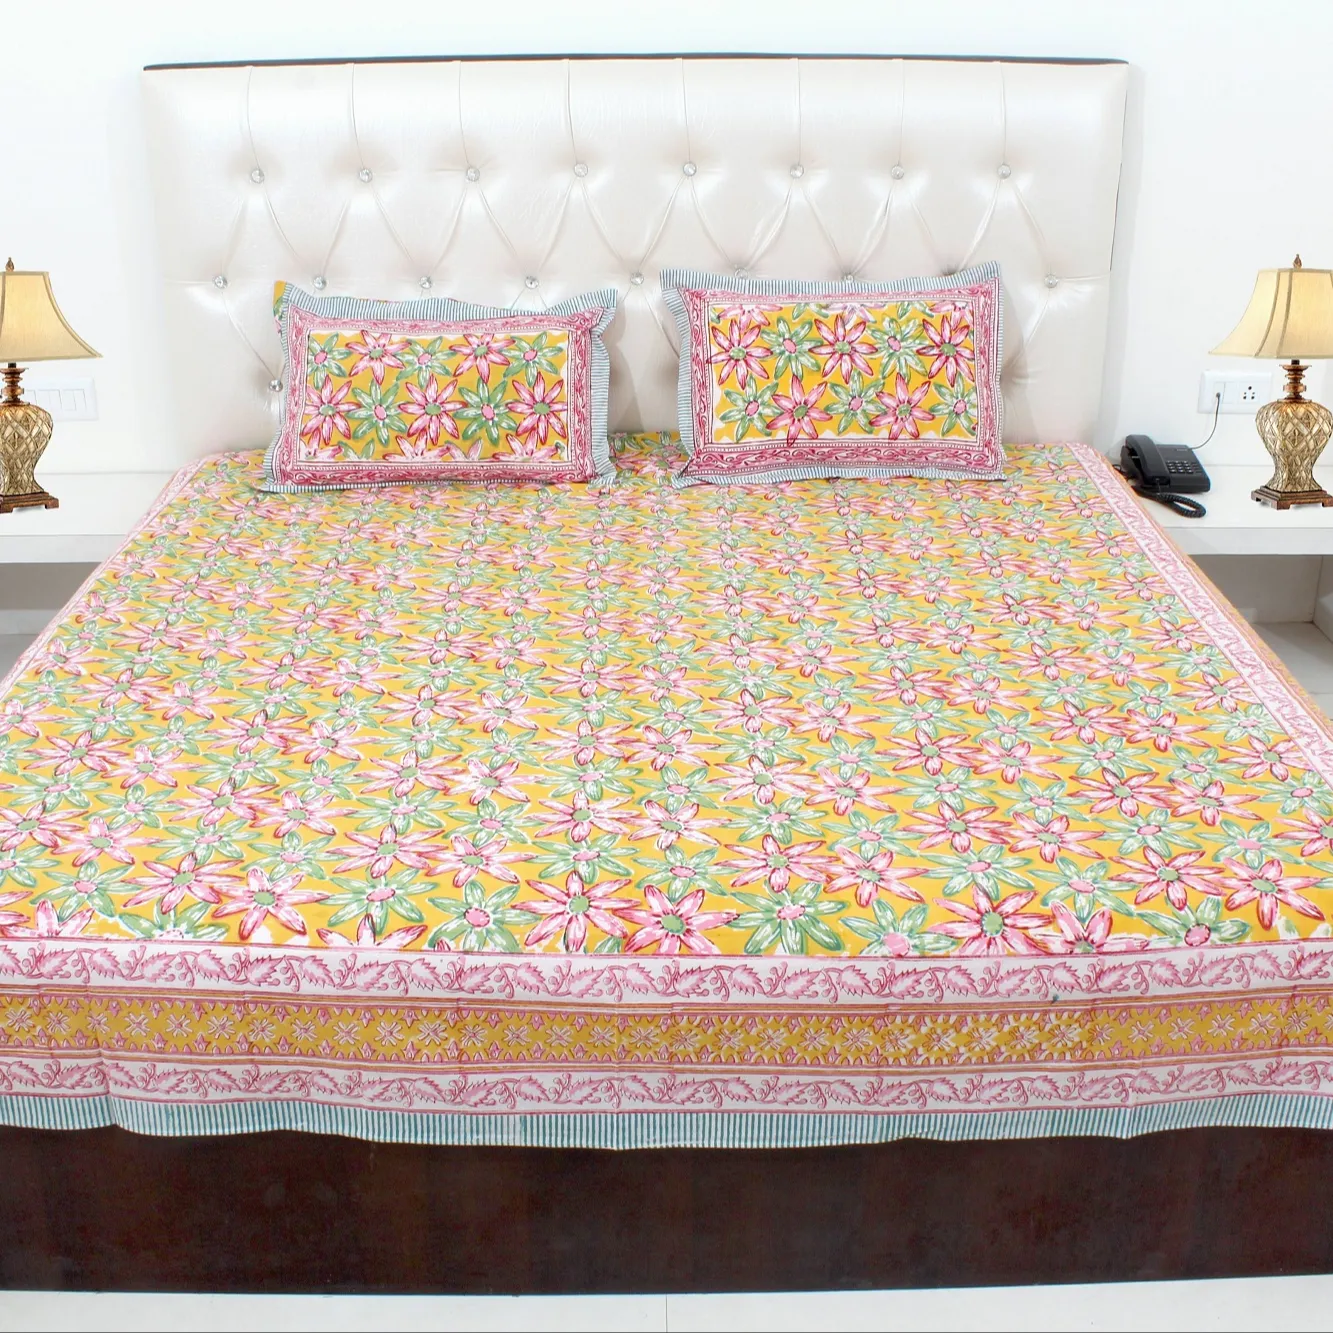 Jaipuriデザイン手作り寝具ベッドシーツコットンベッドサイズハンドブロックプリントベッドカバーセット卸売インドのベッドシーツ